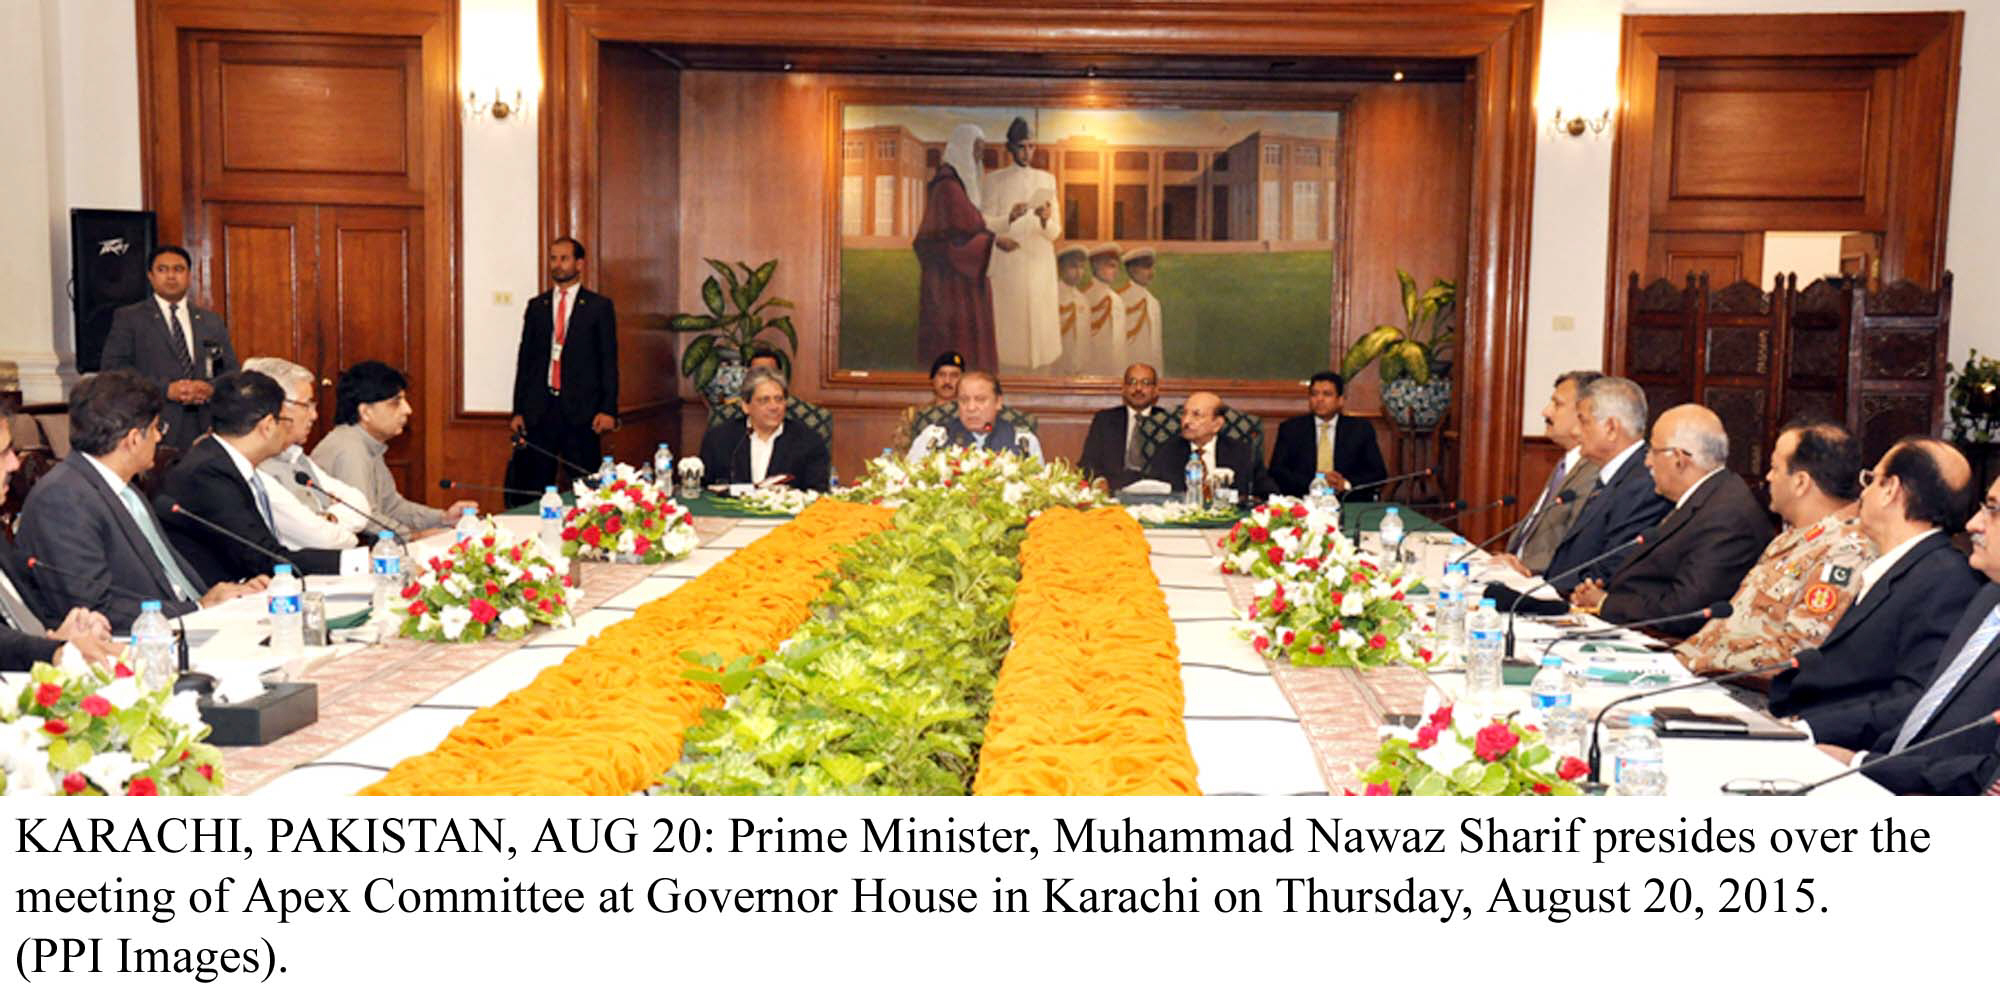 pm nawaz sharif presiding over a meeting at governor house karachi on august 20 photo ppi